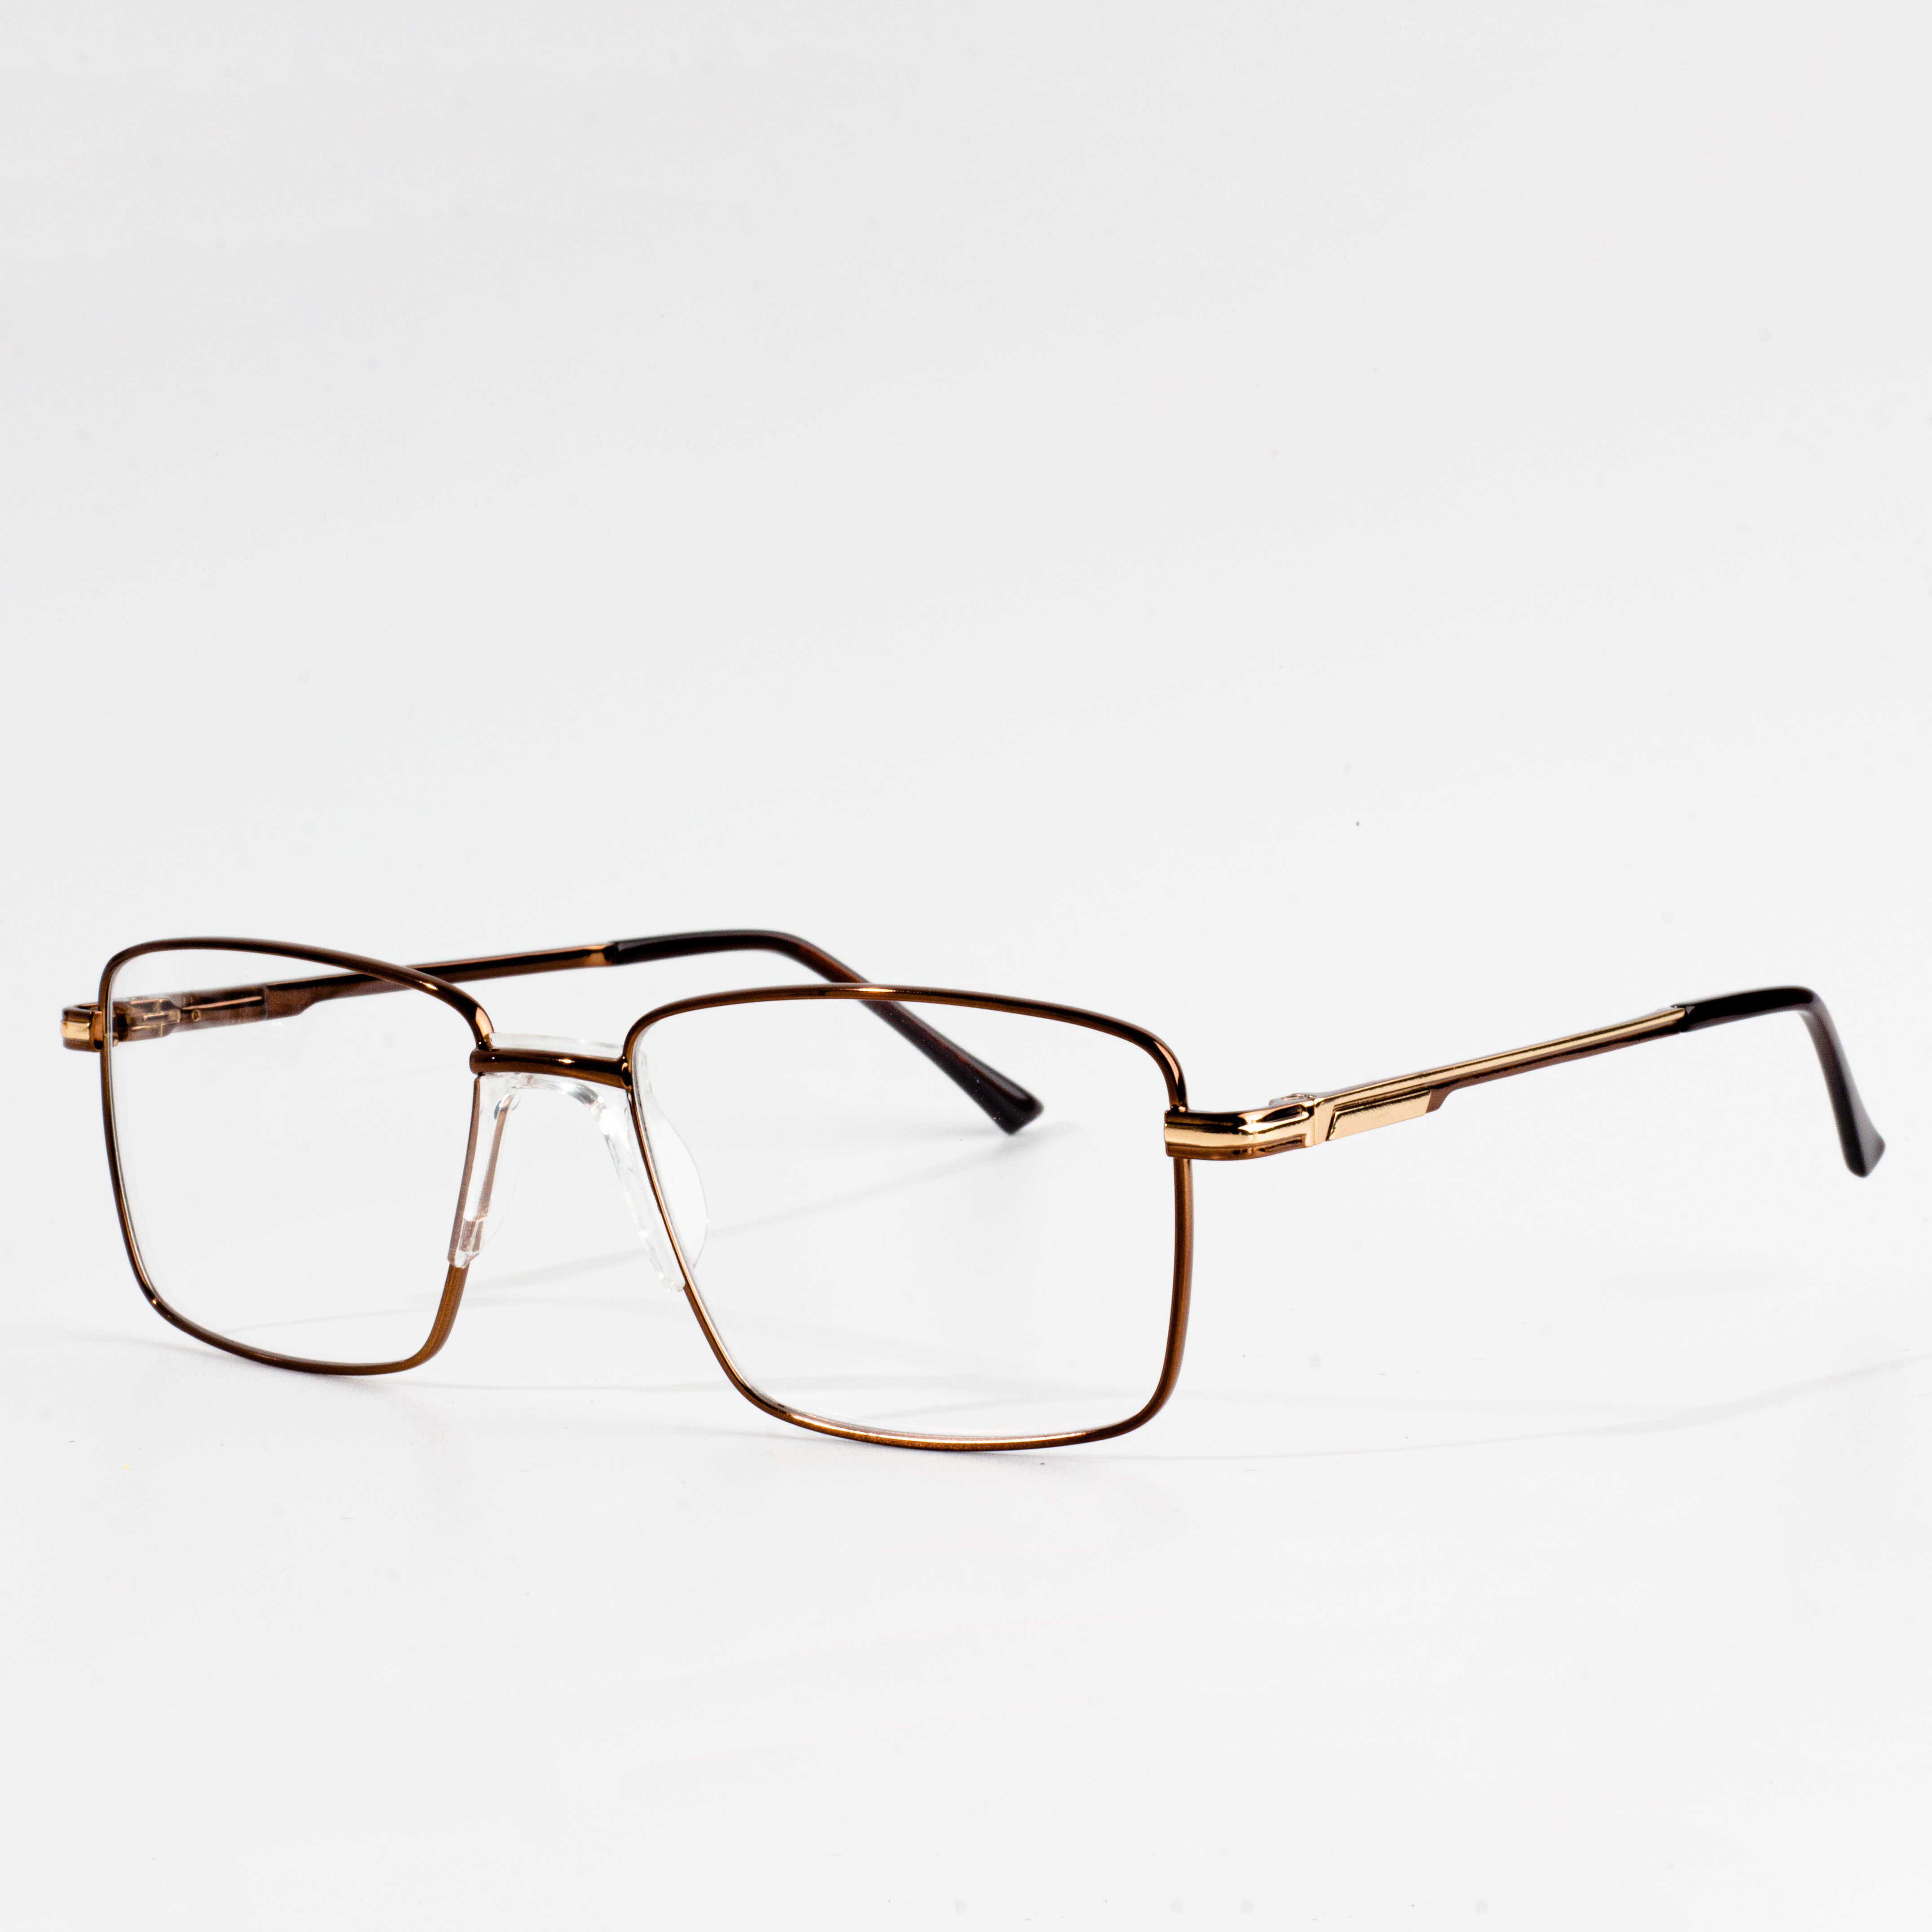 mens eyeglass frames